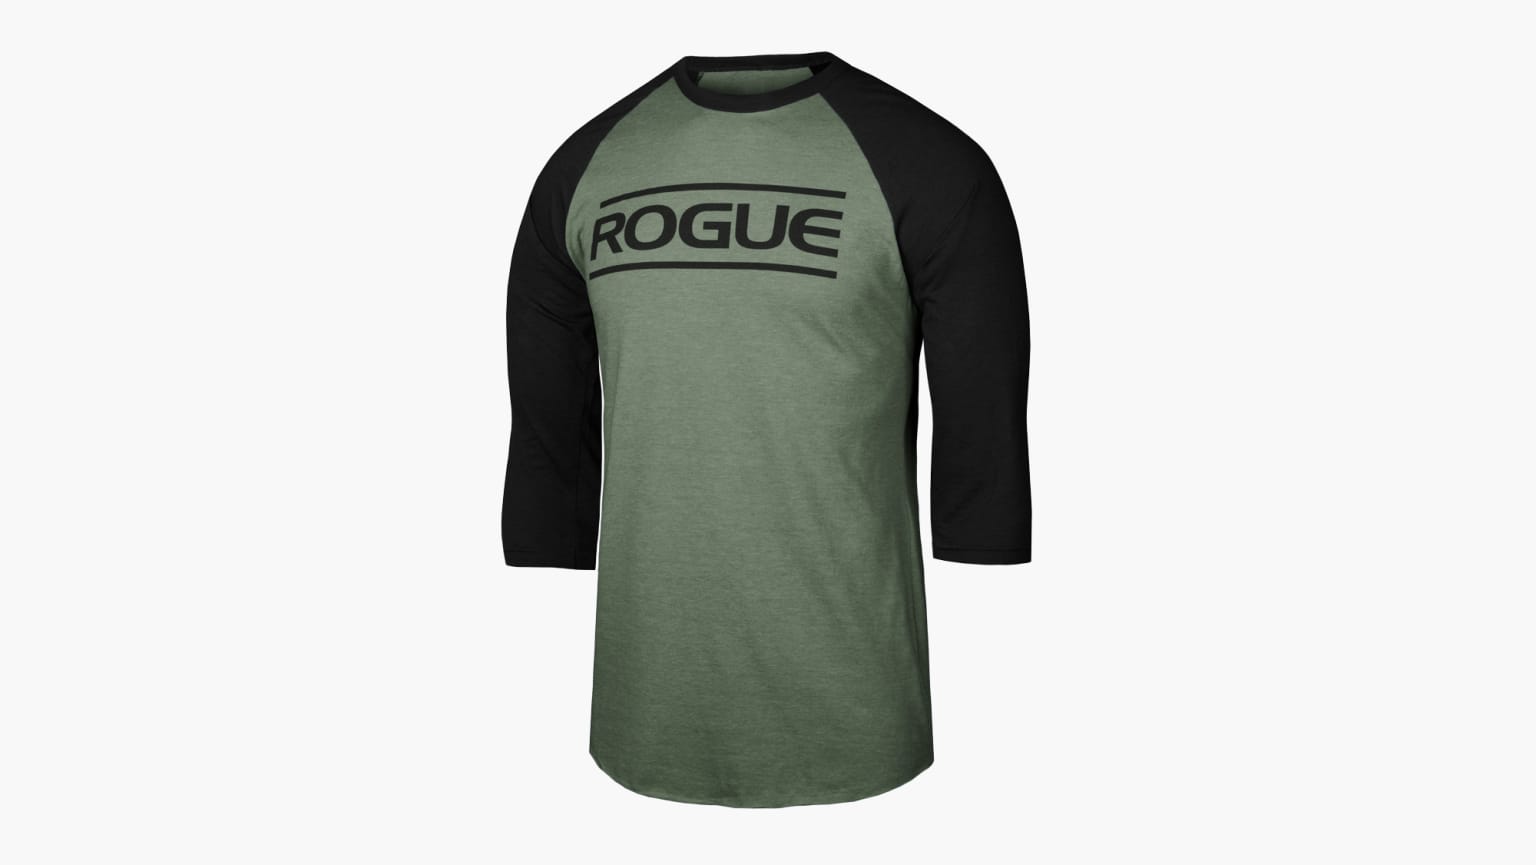 Rogue 3/4 Sleeve Shirt - Military Green / Black